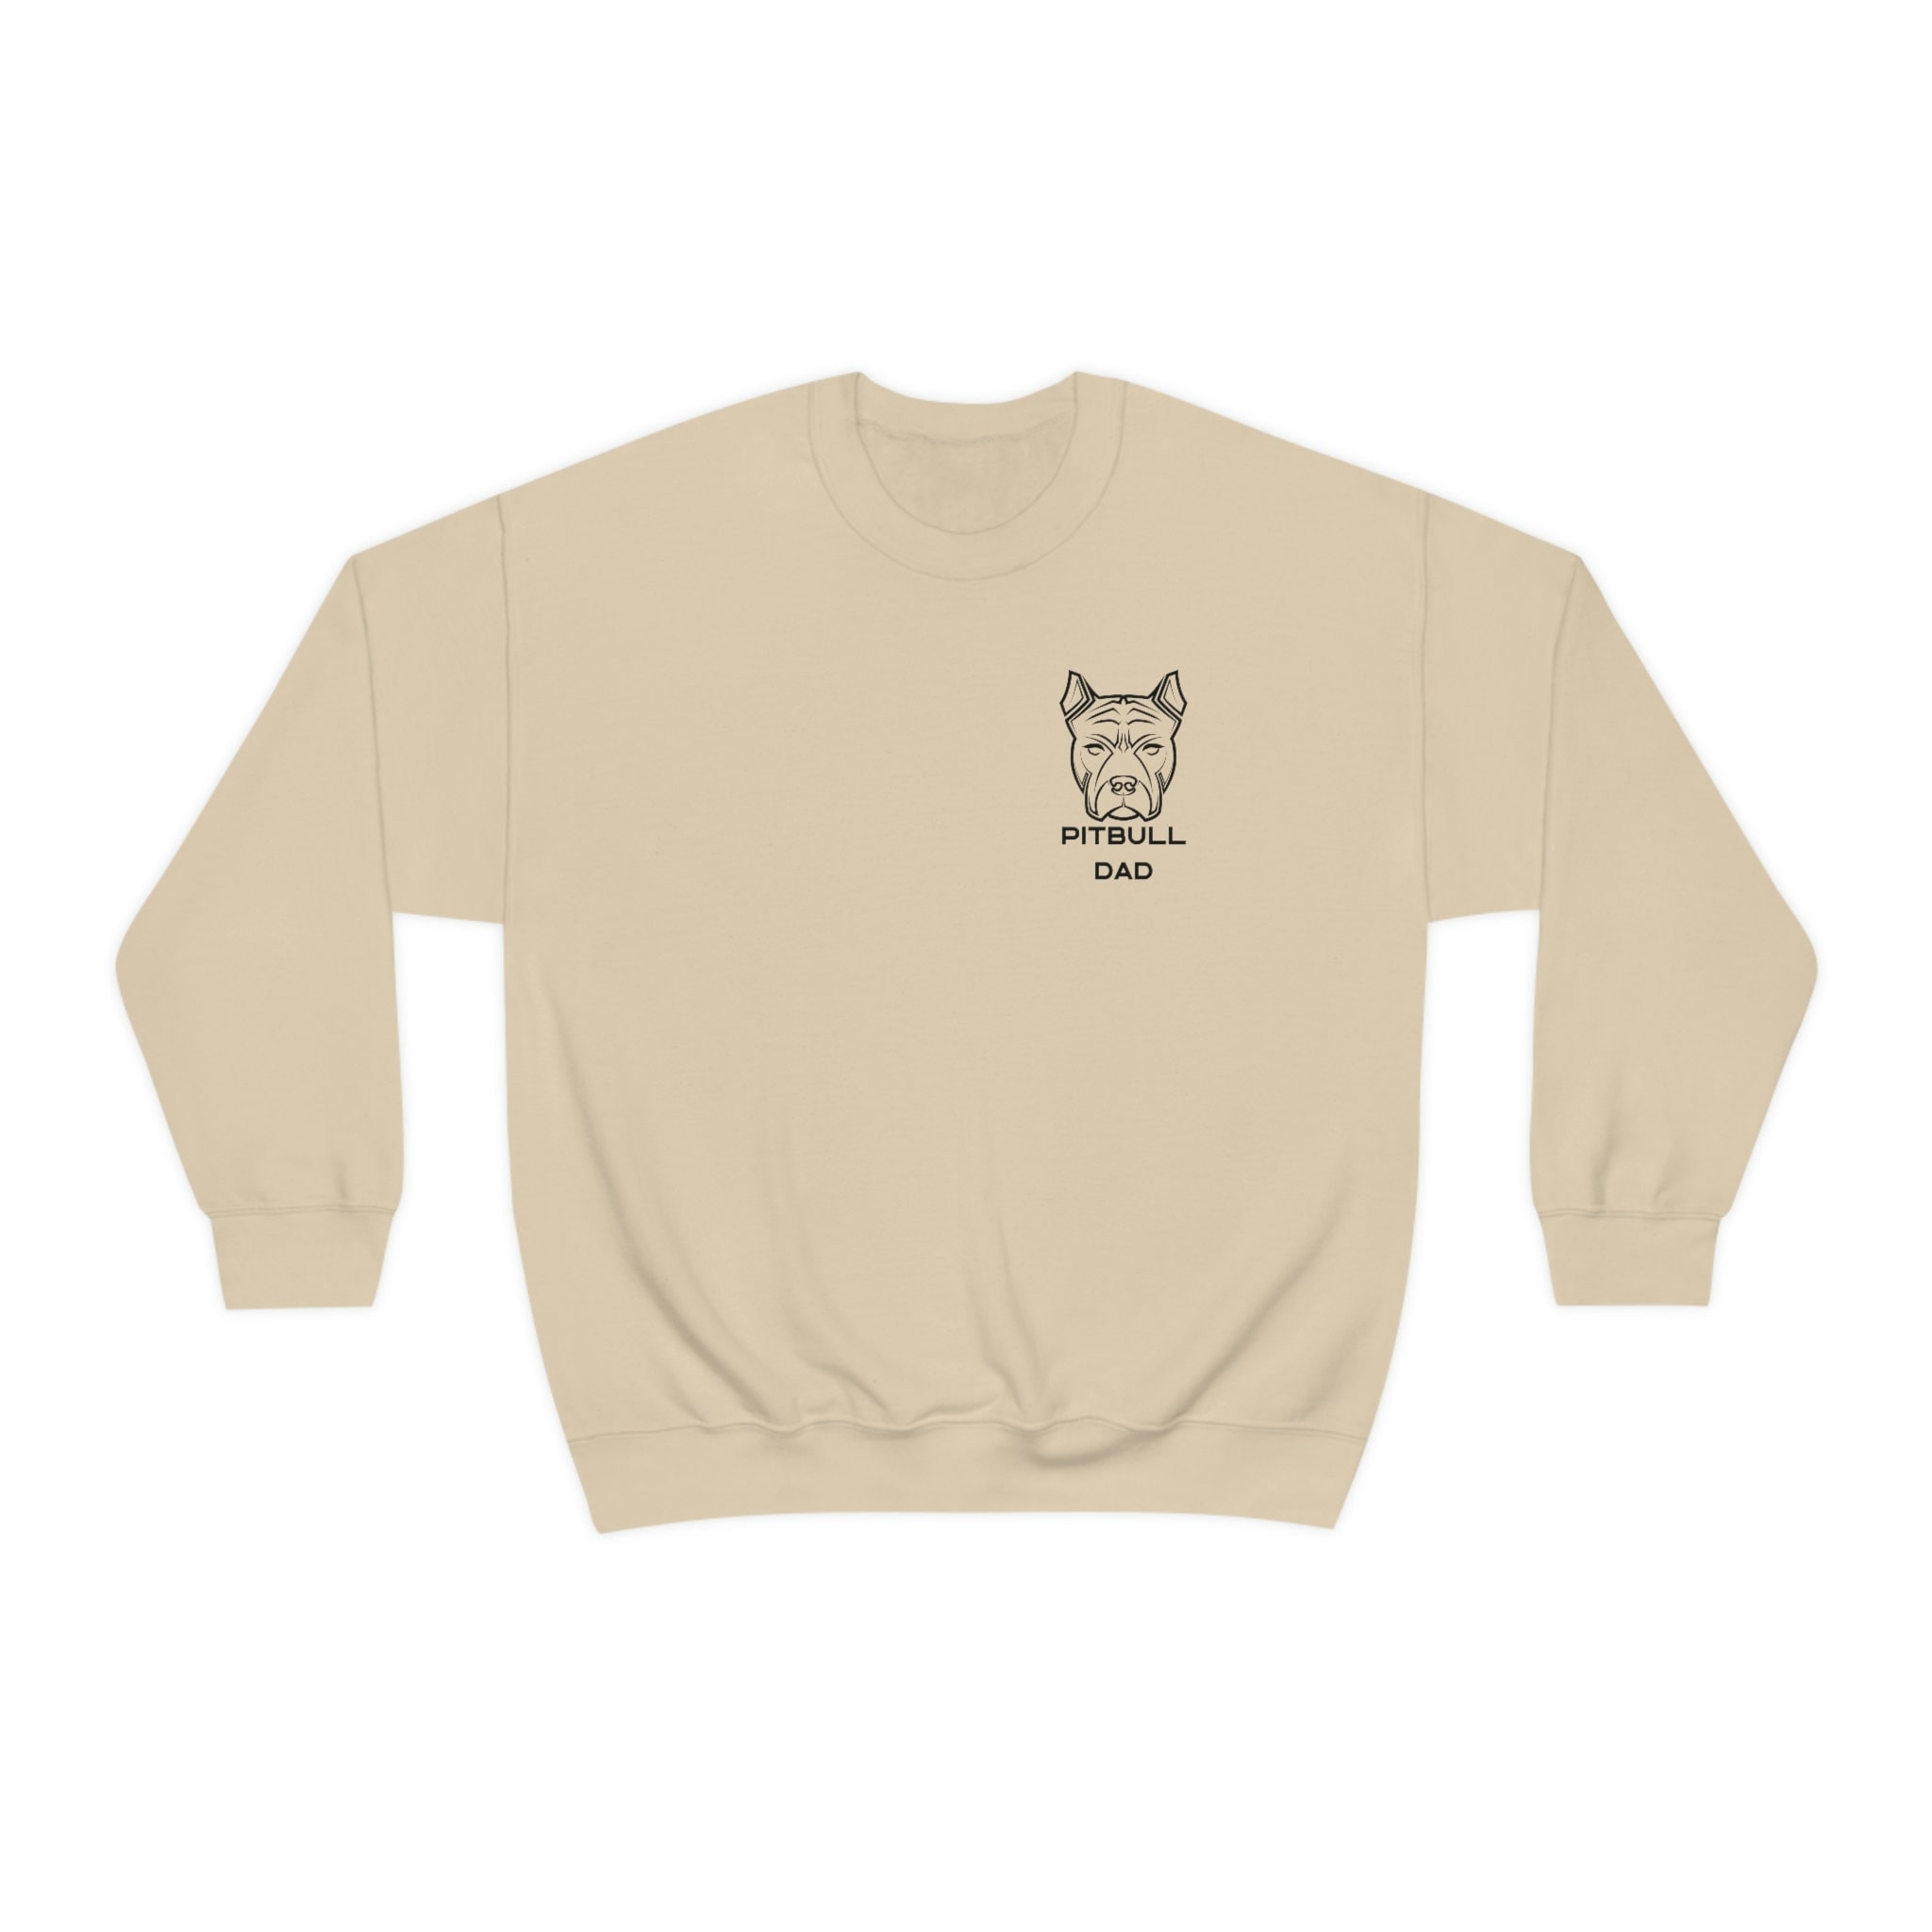 Pitbull dad T Shirts, Hoodies, Sweatshirts & Merch